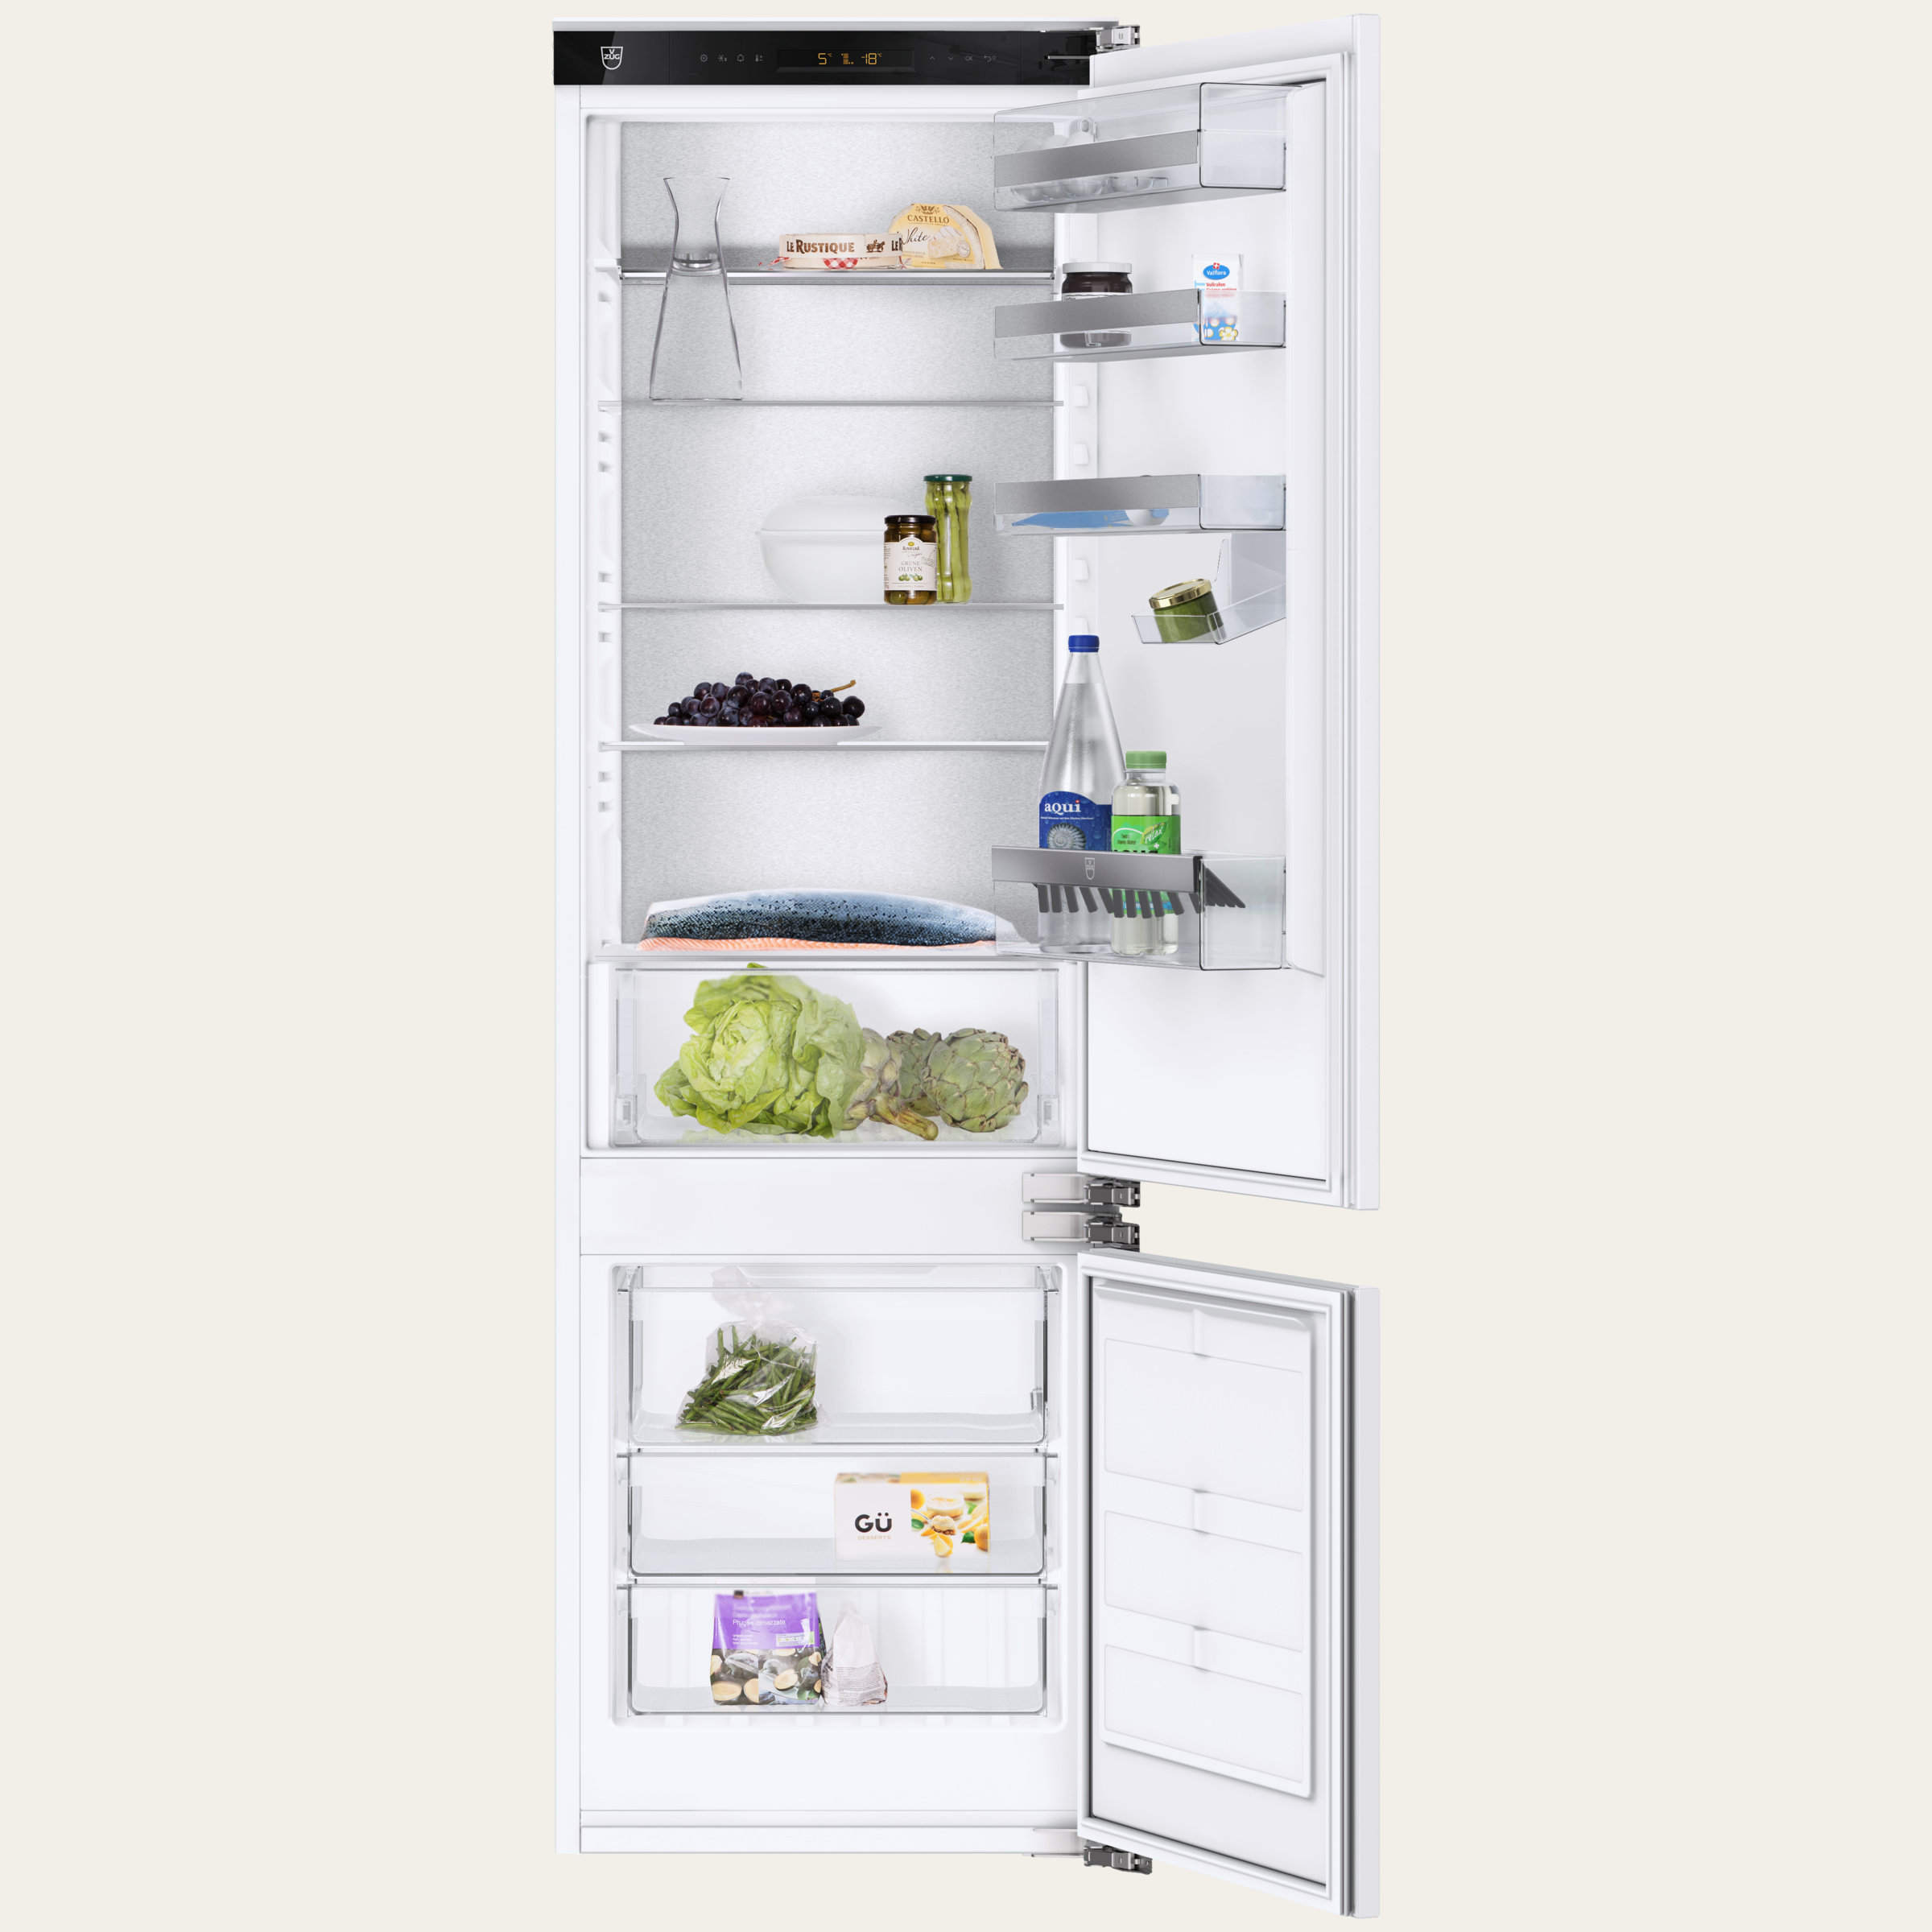 V-ZUG Refrigerator/freezer CombiCooler V4000, Standard width: 60 cm, Standard height: 177.8 cm, Fully integratable, Door hinge: Right, TouchControl, NoFrost